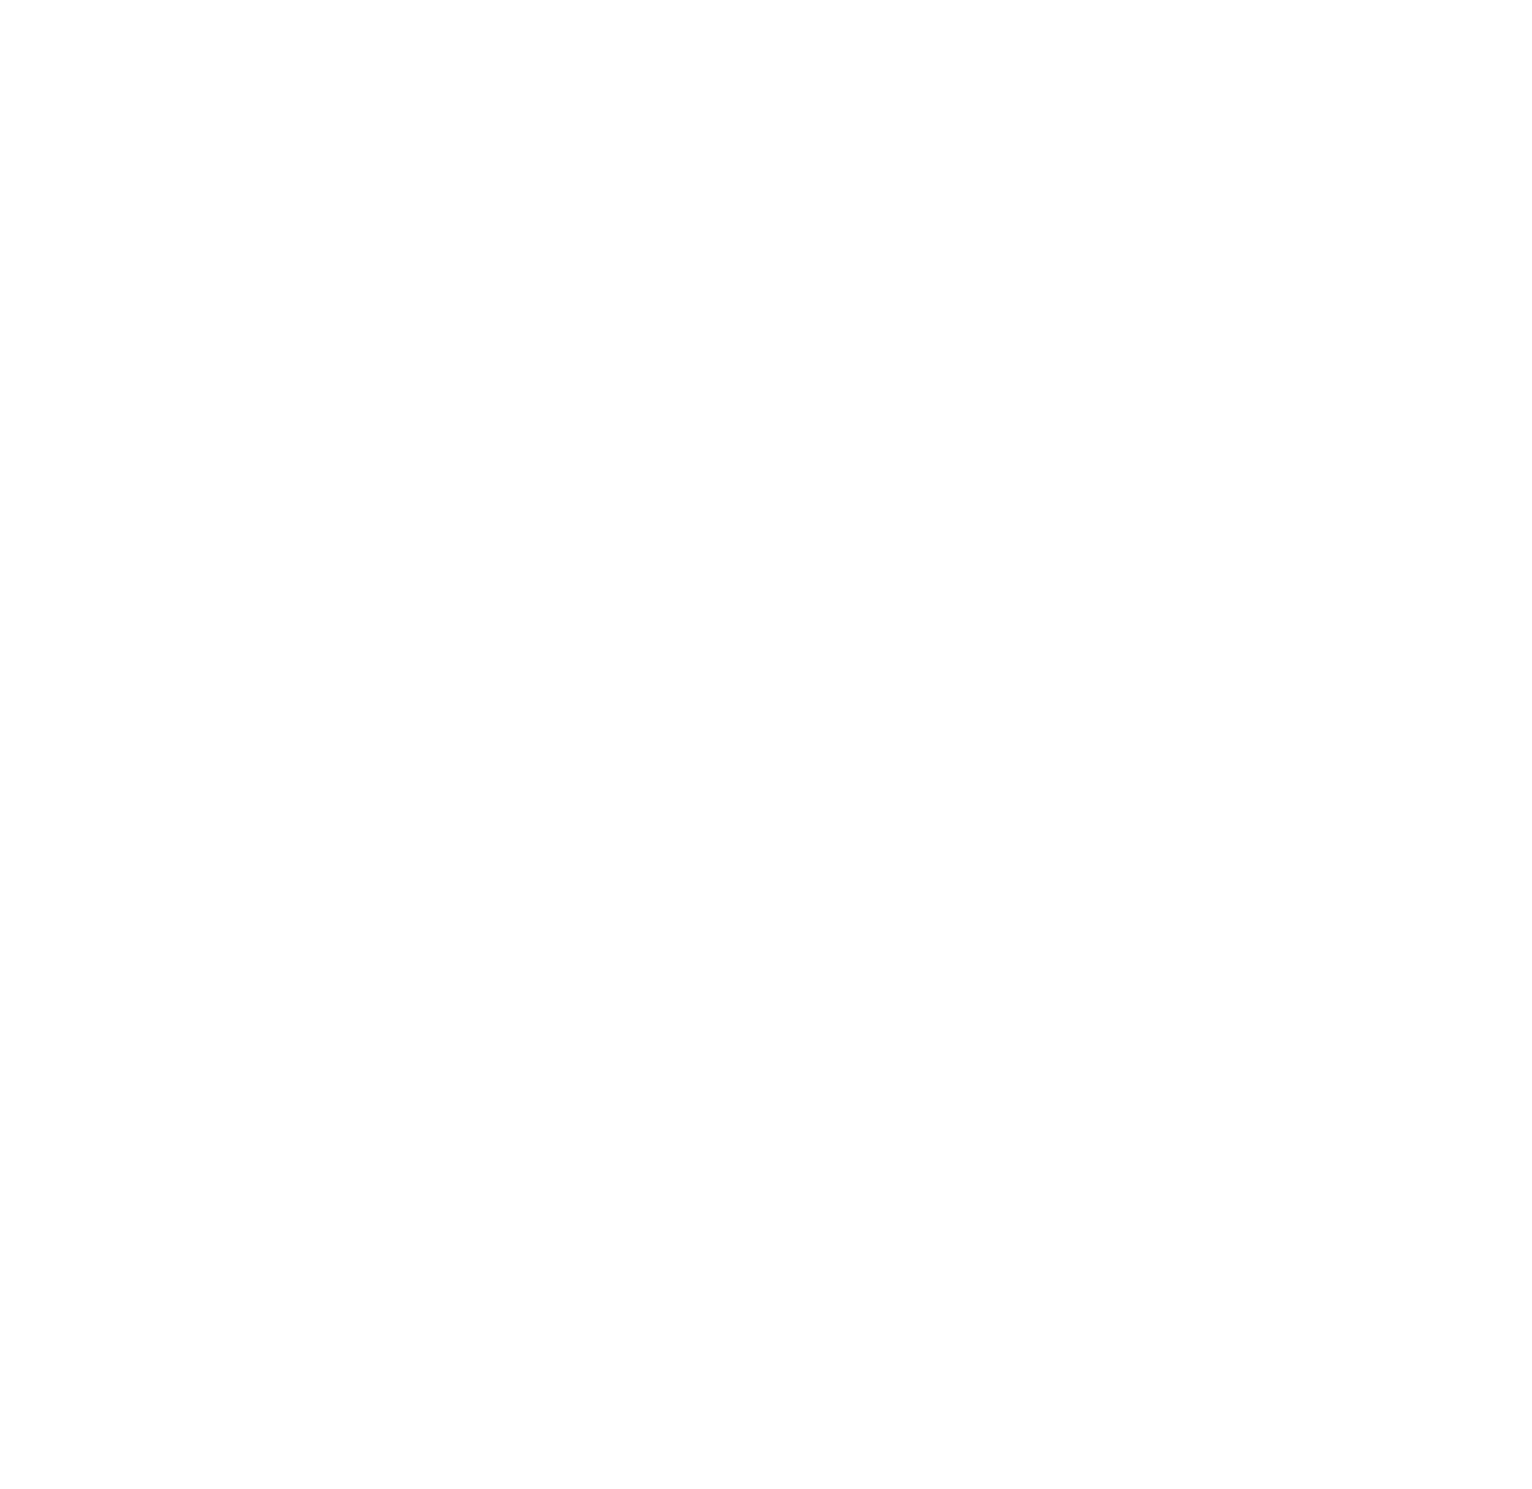 Woolworths Group logo for dark backgrounds (transparent PNG)